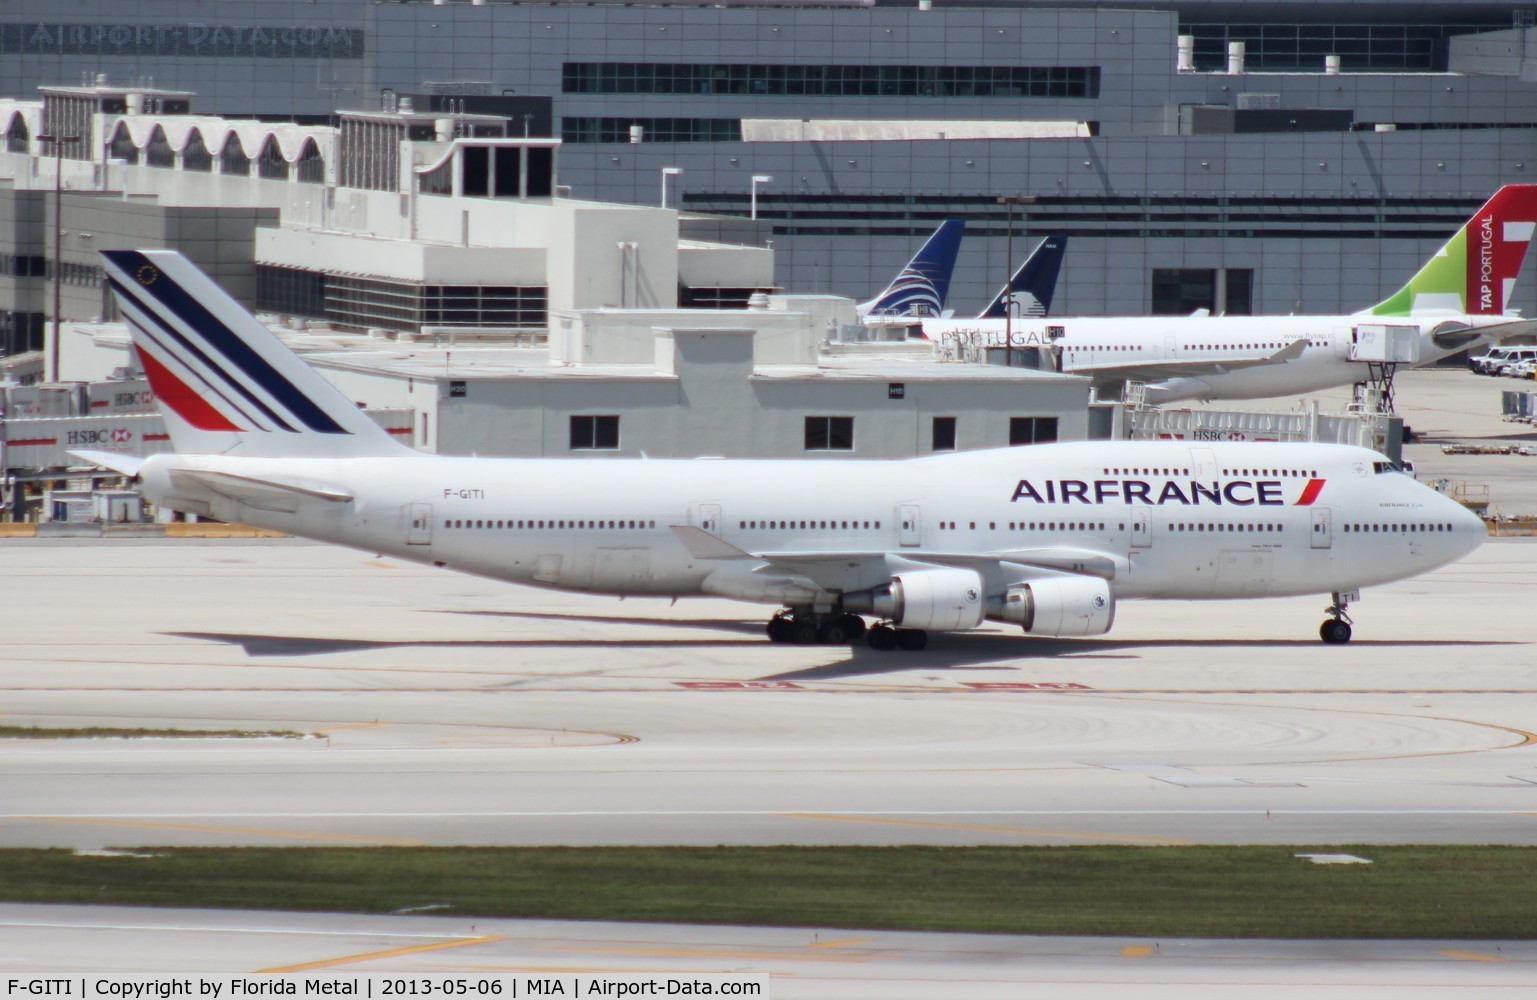 F-GITI, 2003 Boeing 747-428 C/N 32869, Air France 747-400